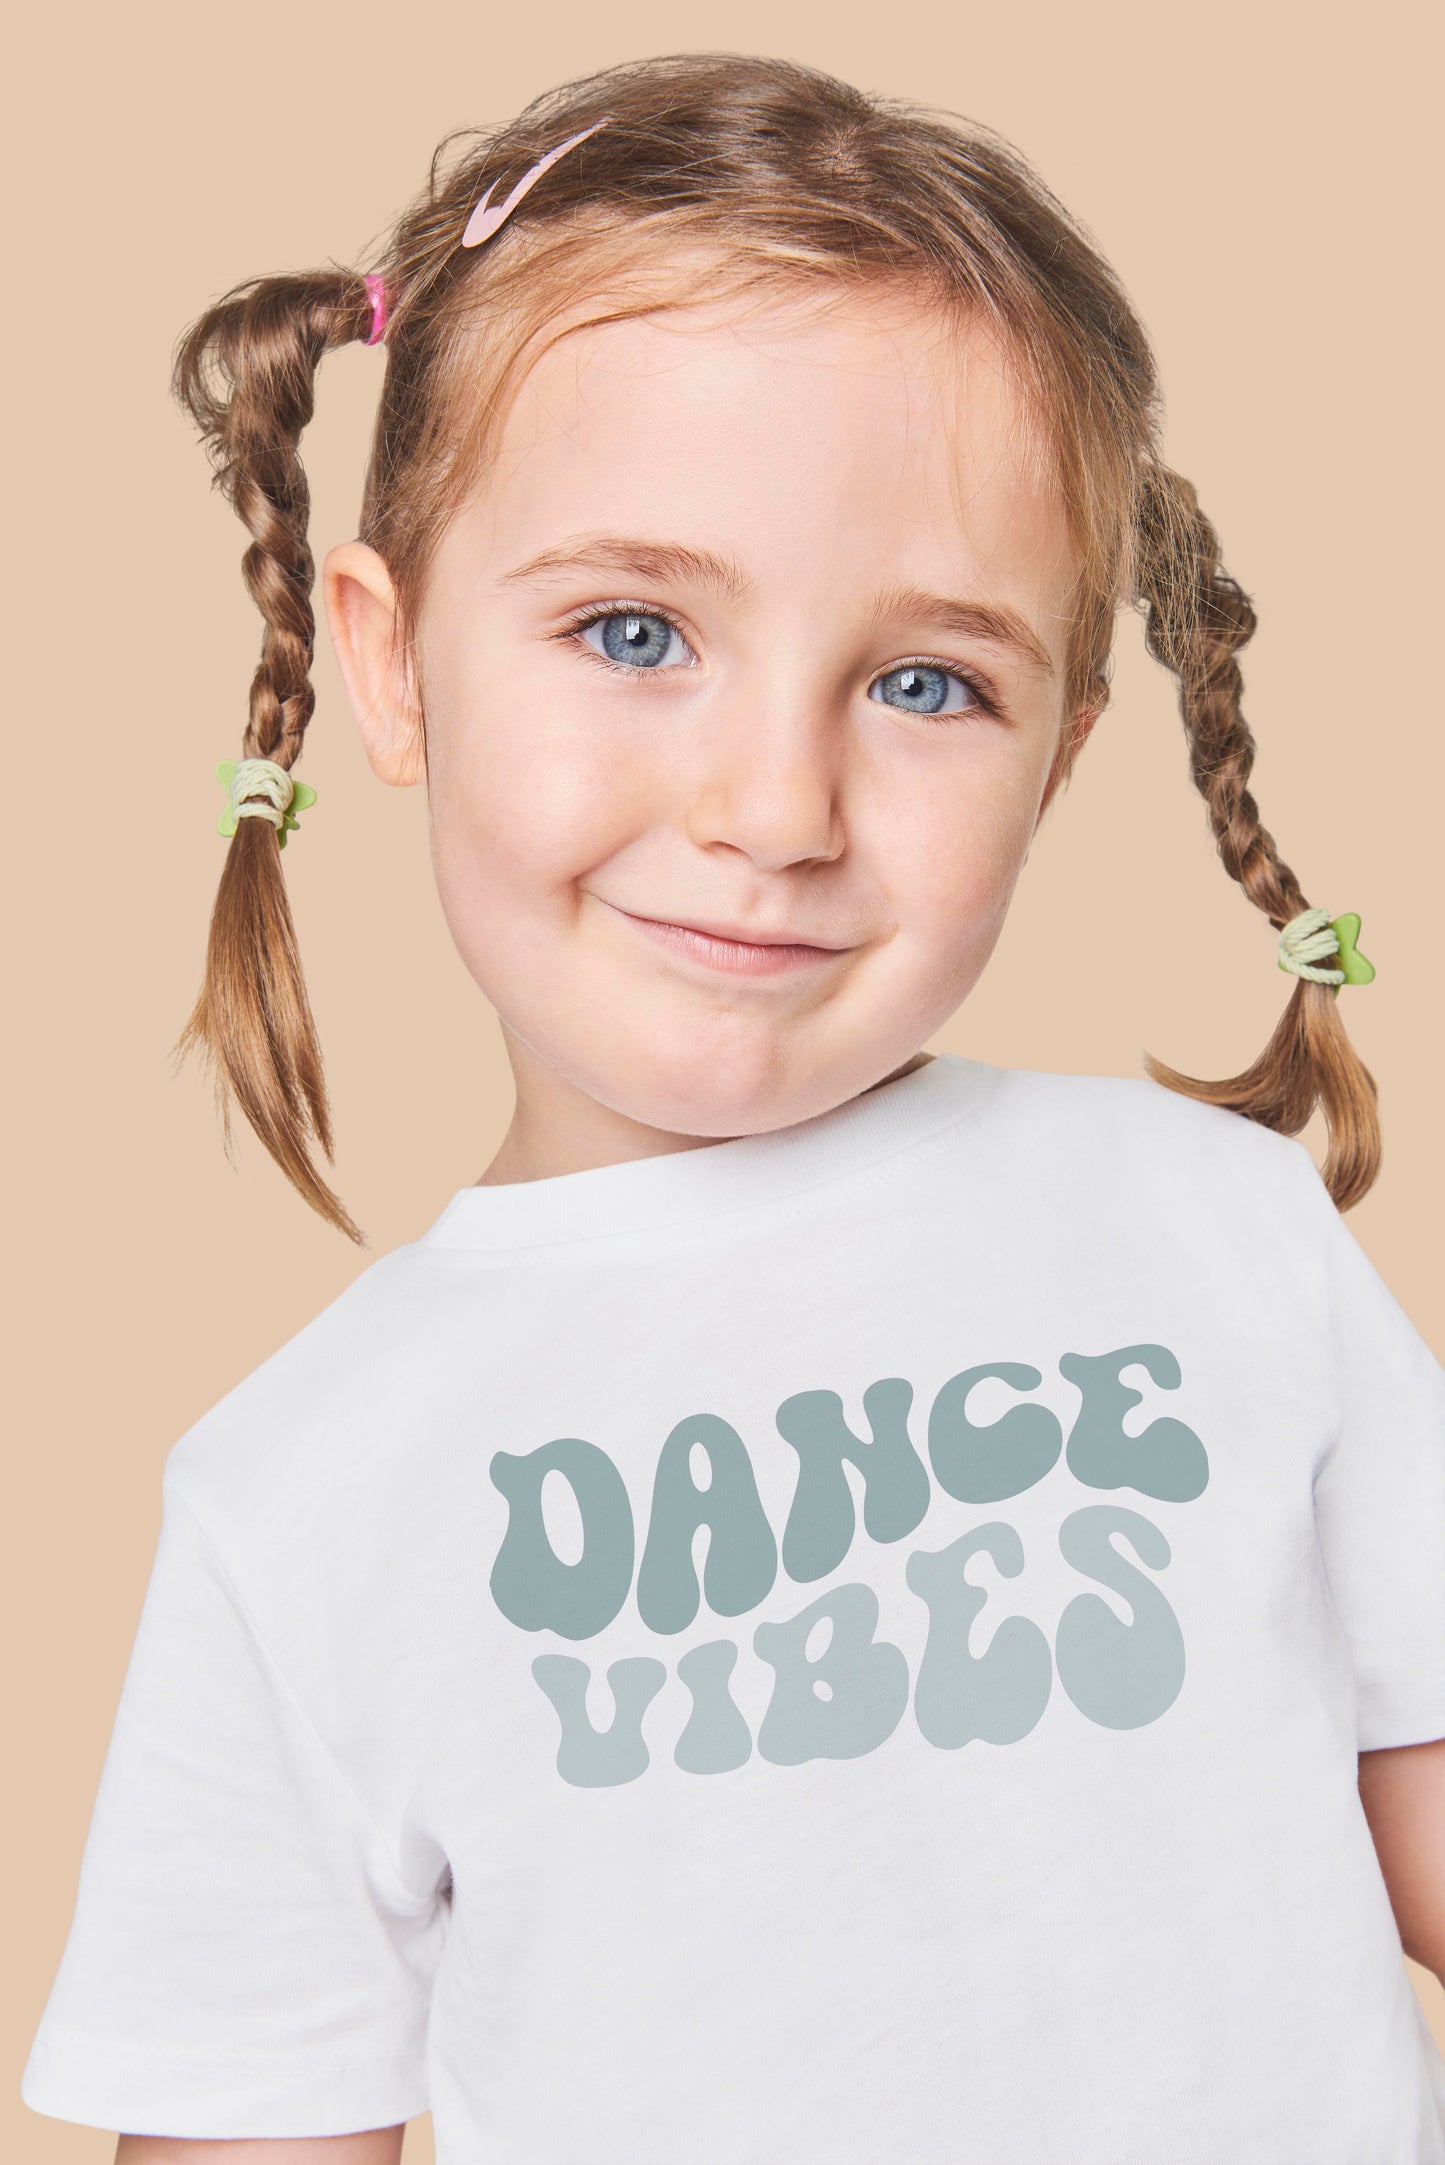 Dance Designs SVG Bundle 1